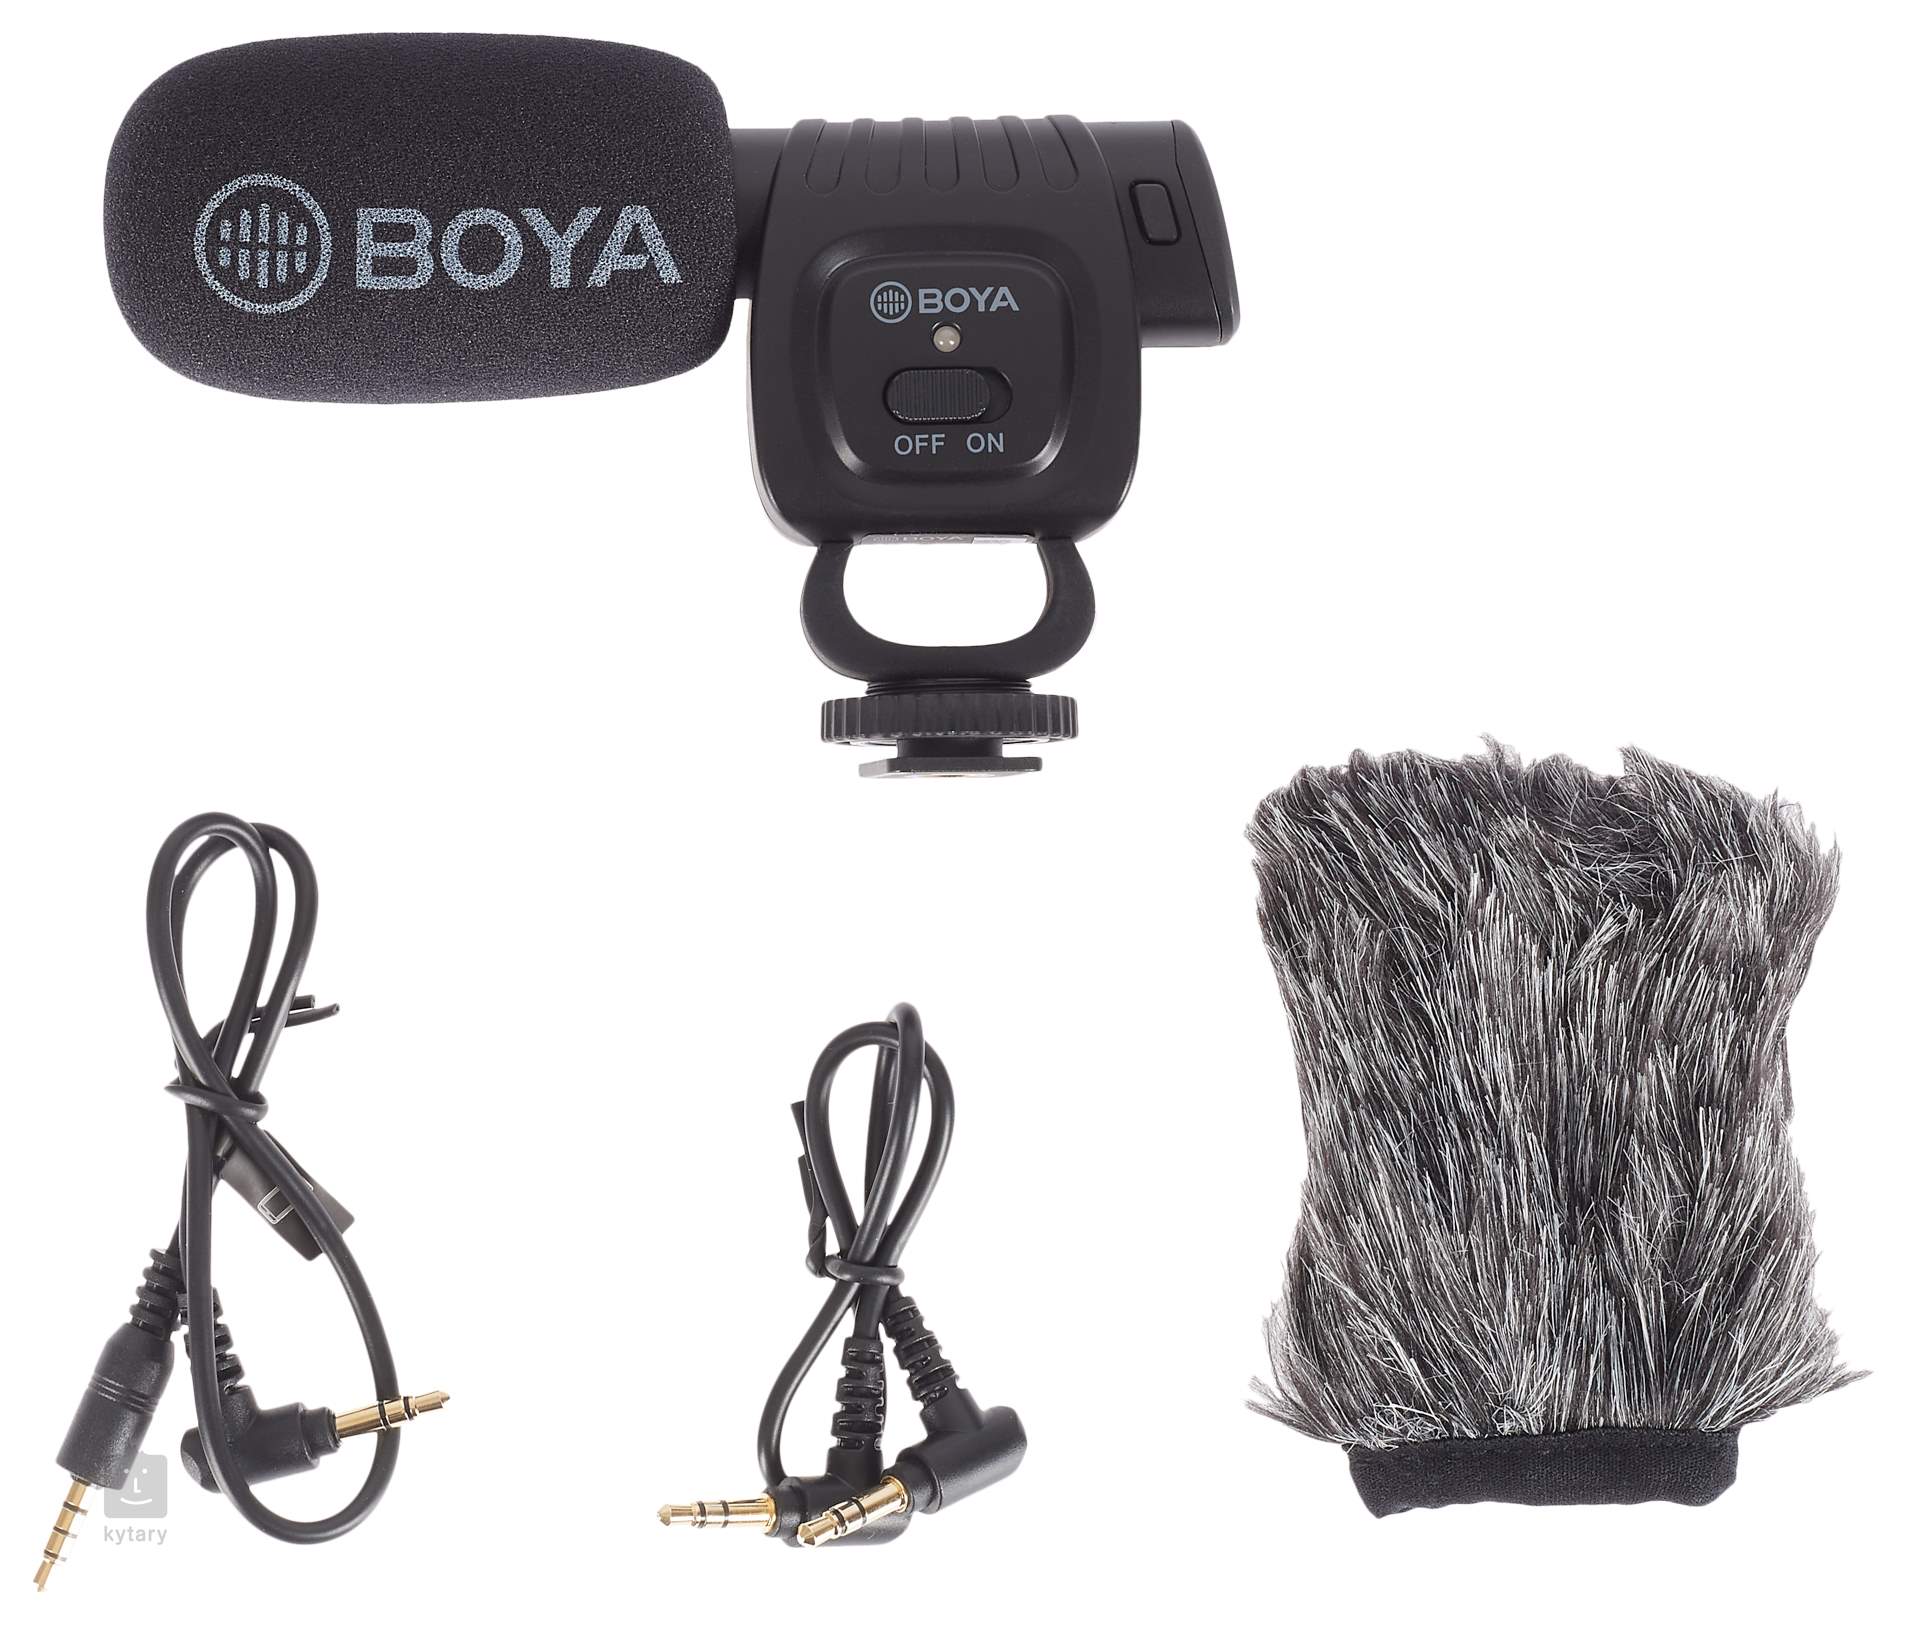 Micrófono Boya BY-BM3011